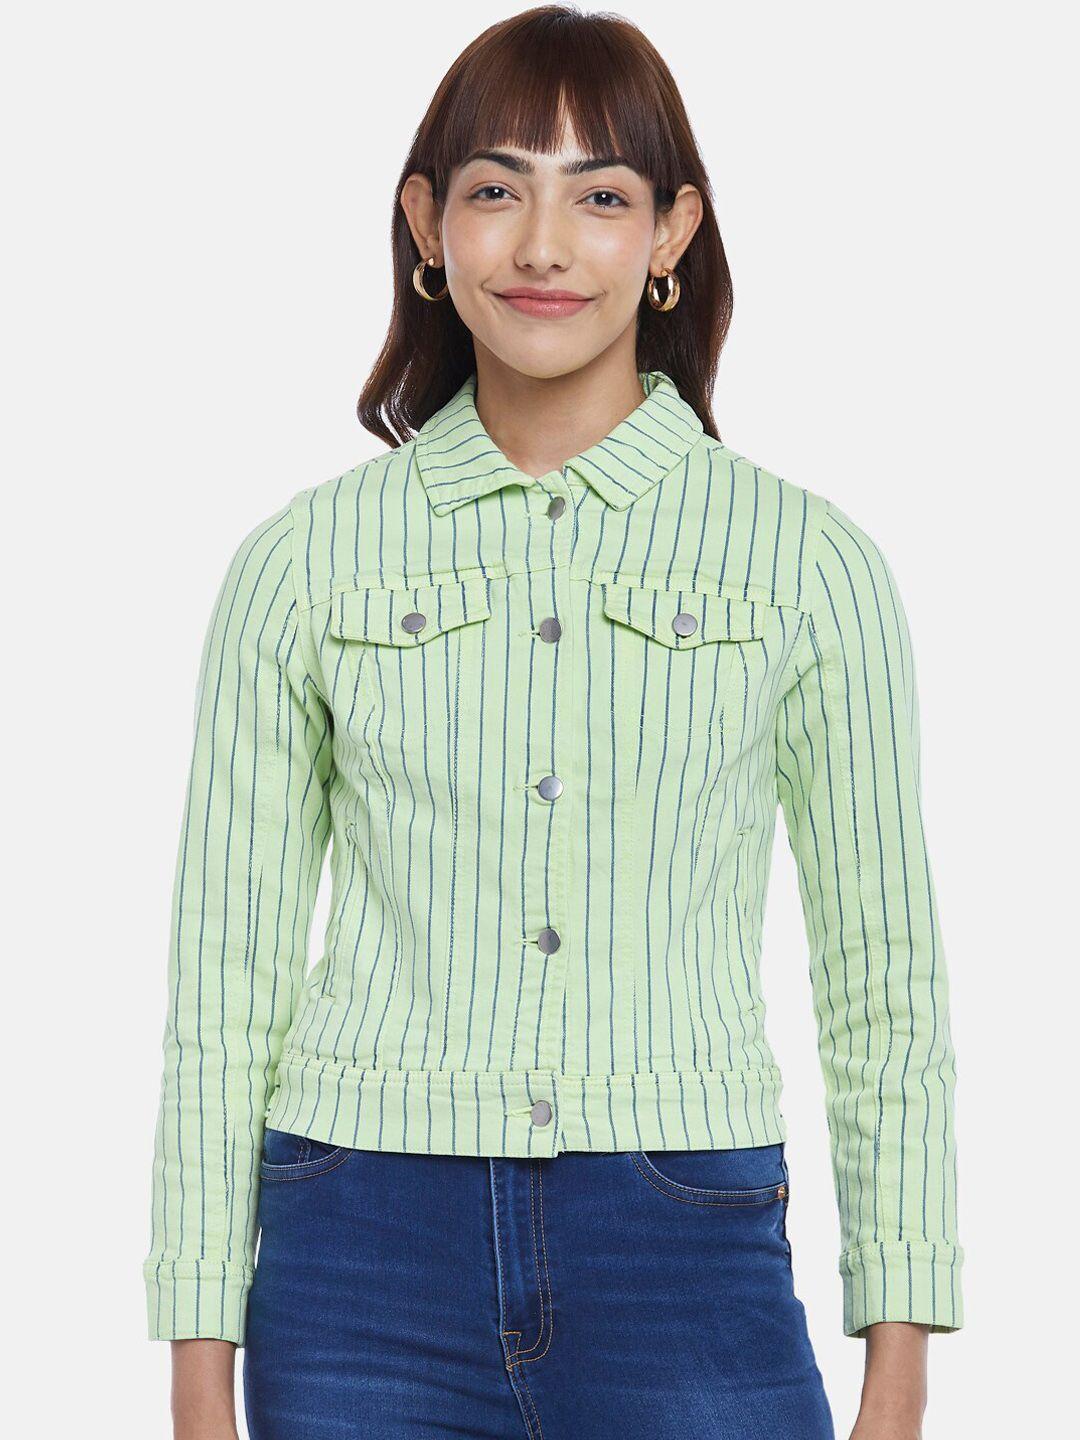 honey by pantaloons women green cotton striped denim jacket